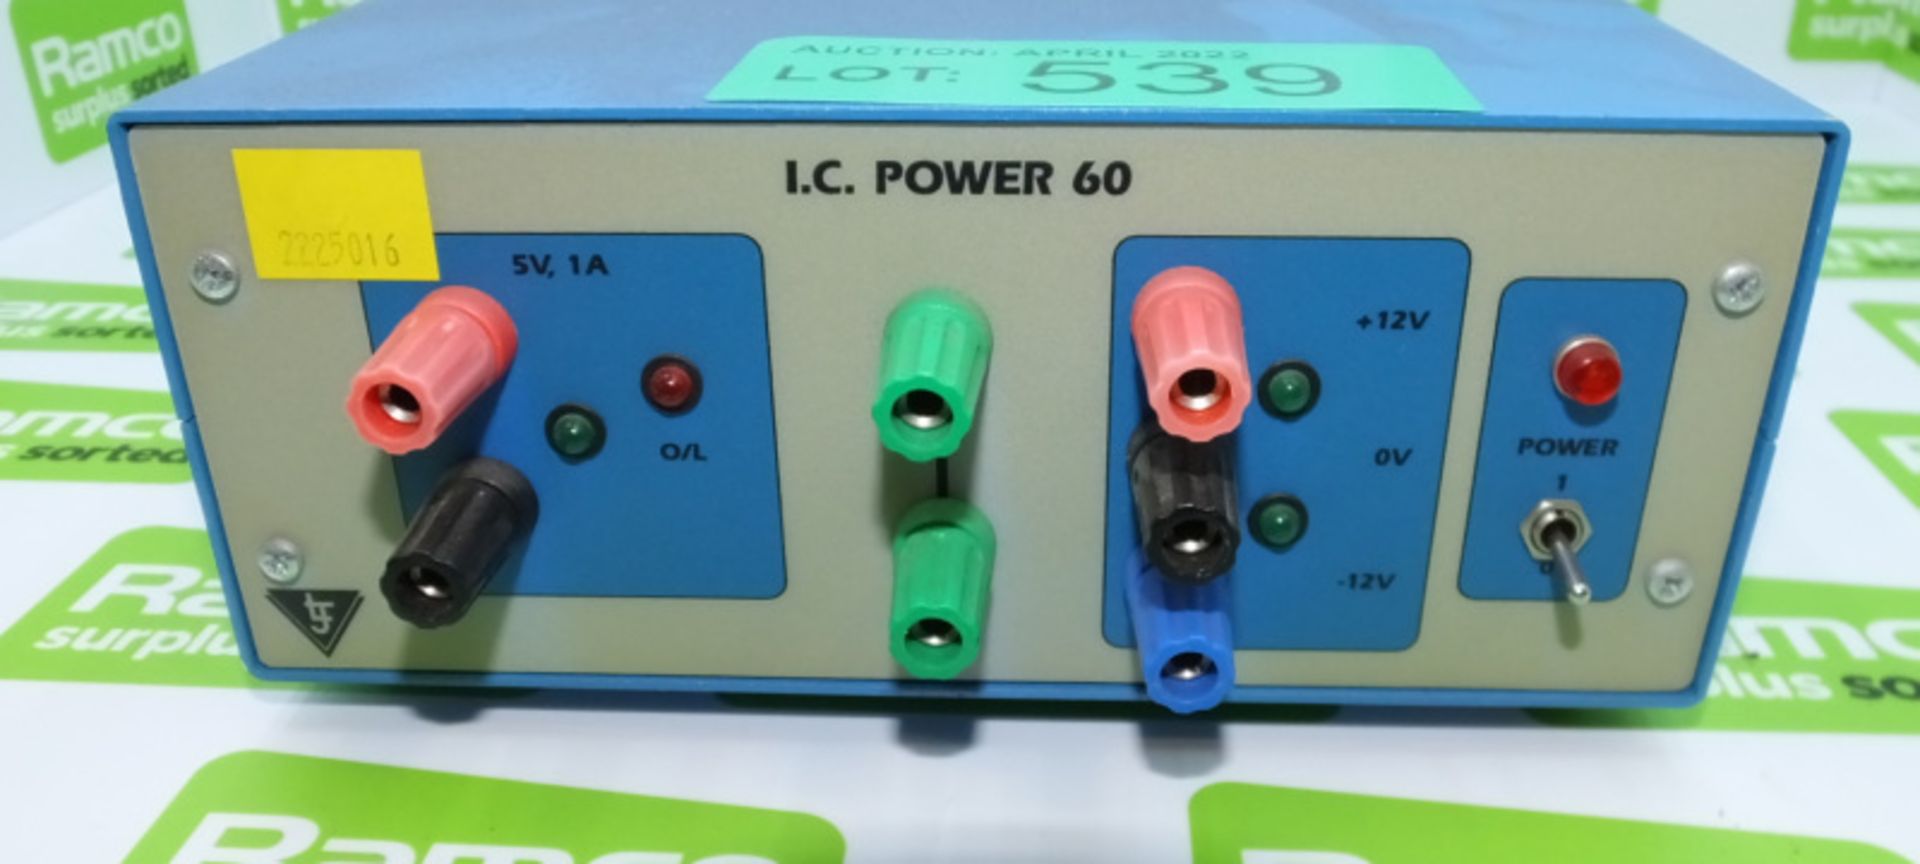 L.J. Tech I.C. Power 60 Power Supply - Image 2 of 4